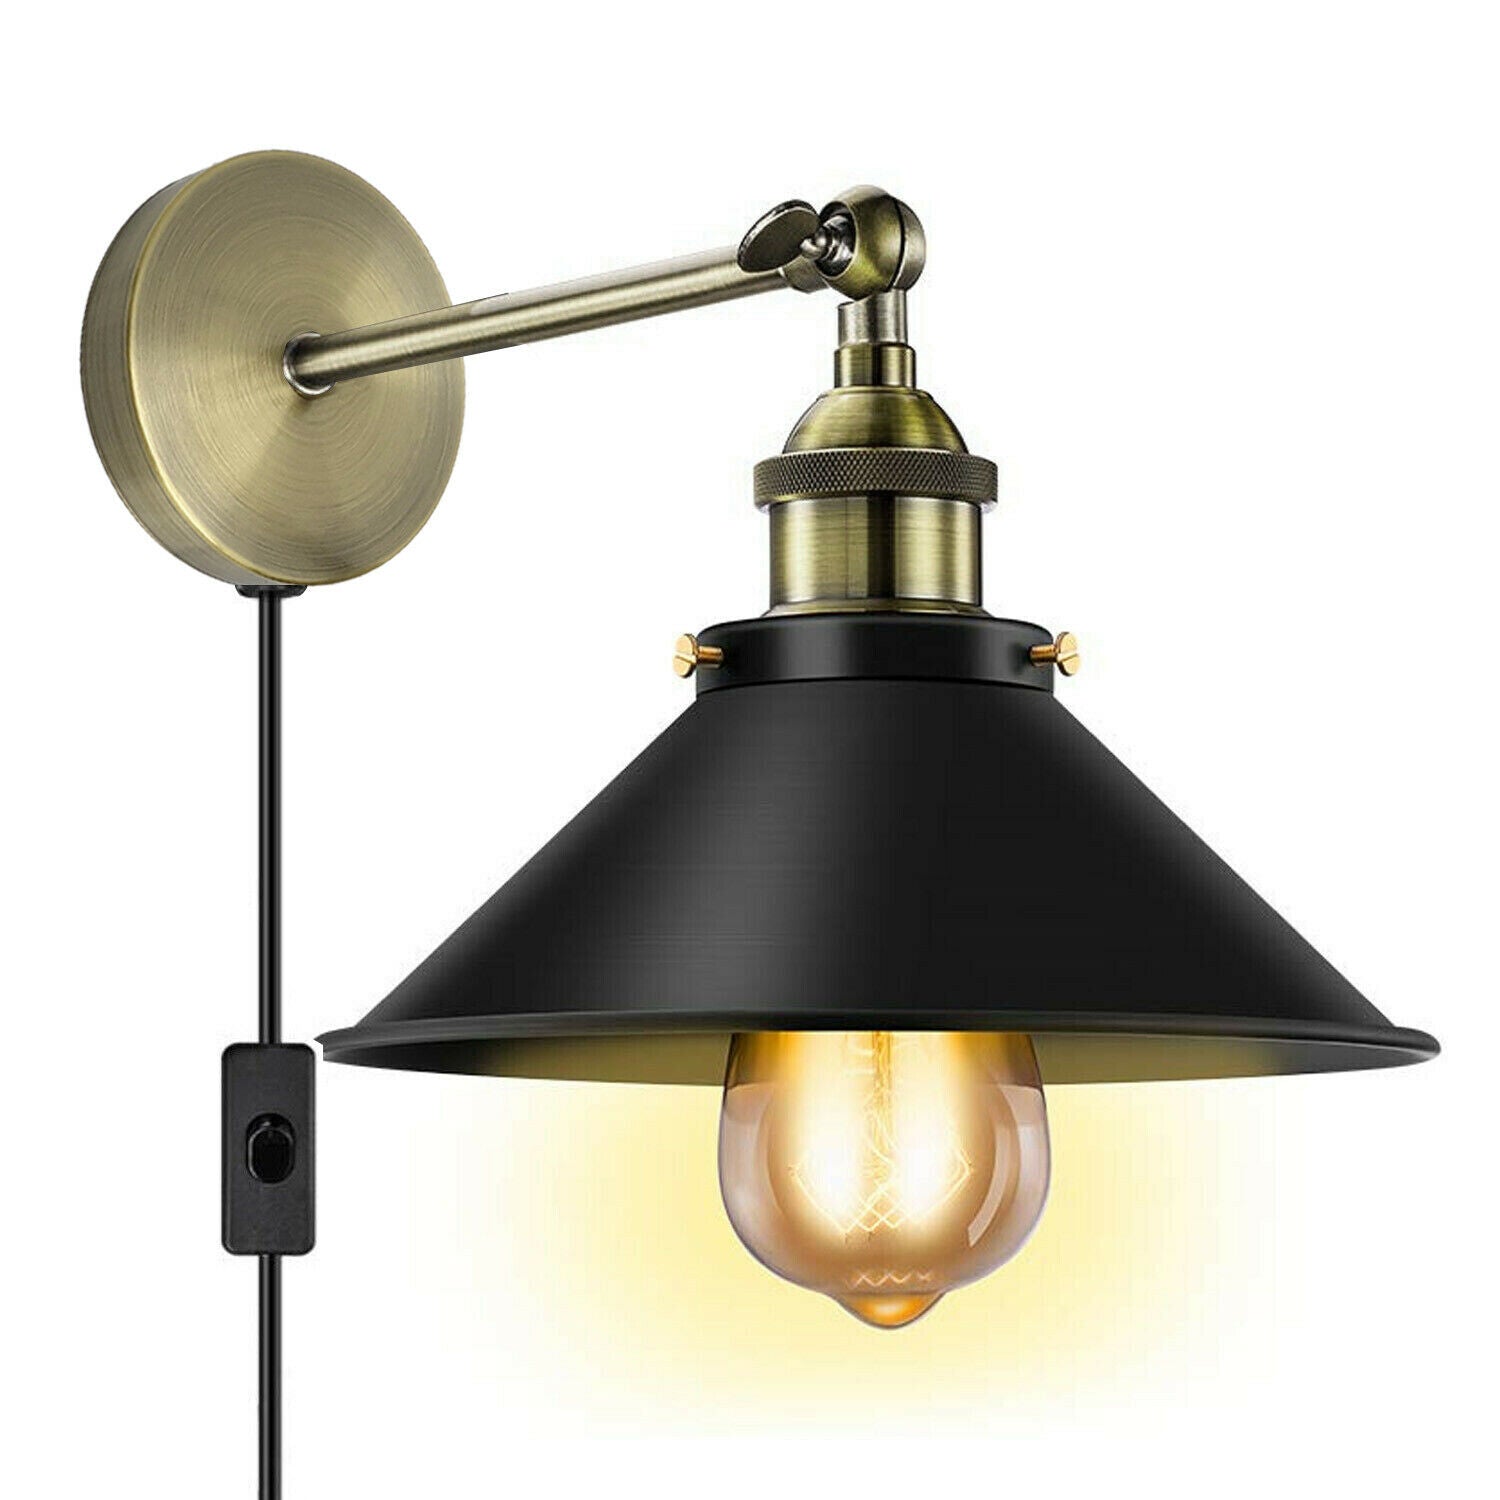 Vintage Retro Modern Plug In Wall Light Fitting Black Sconce Lamp shade fitting Shade Wall Light UK~2273 - LEDSone UK Ltd